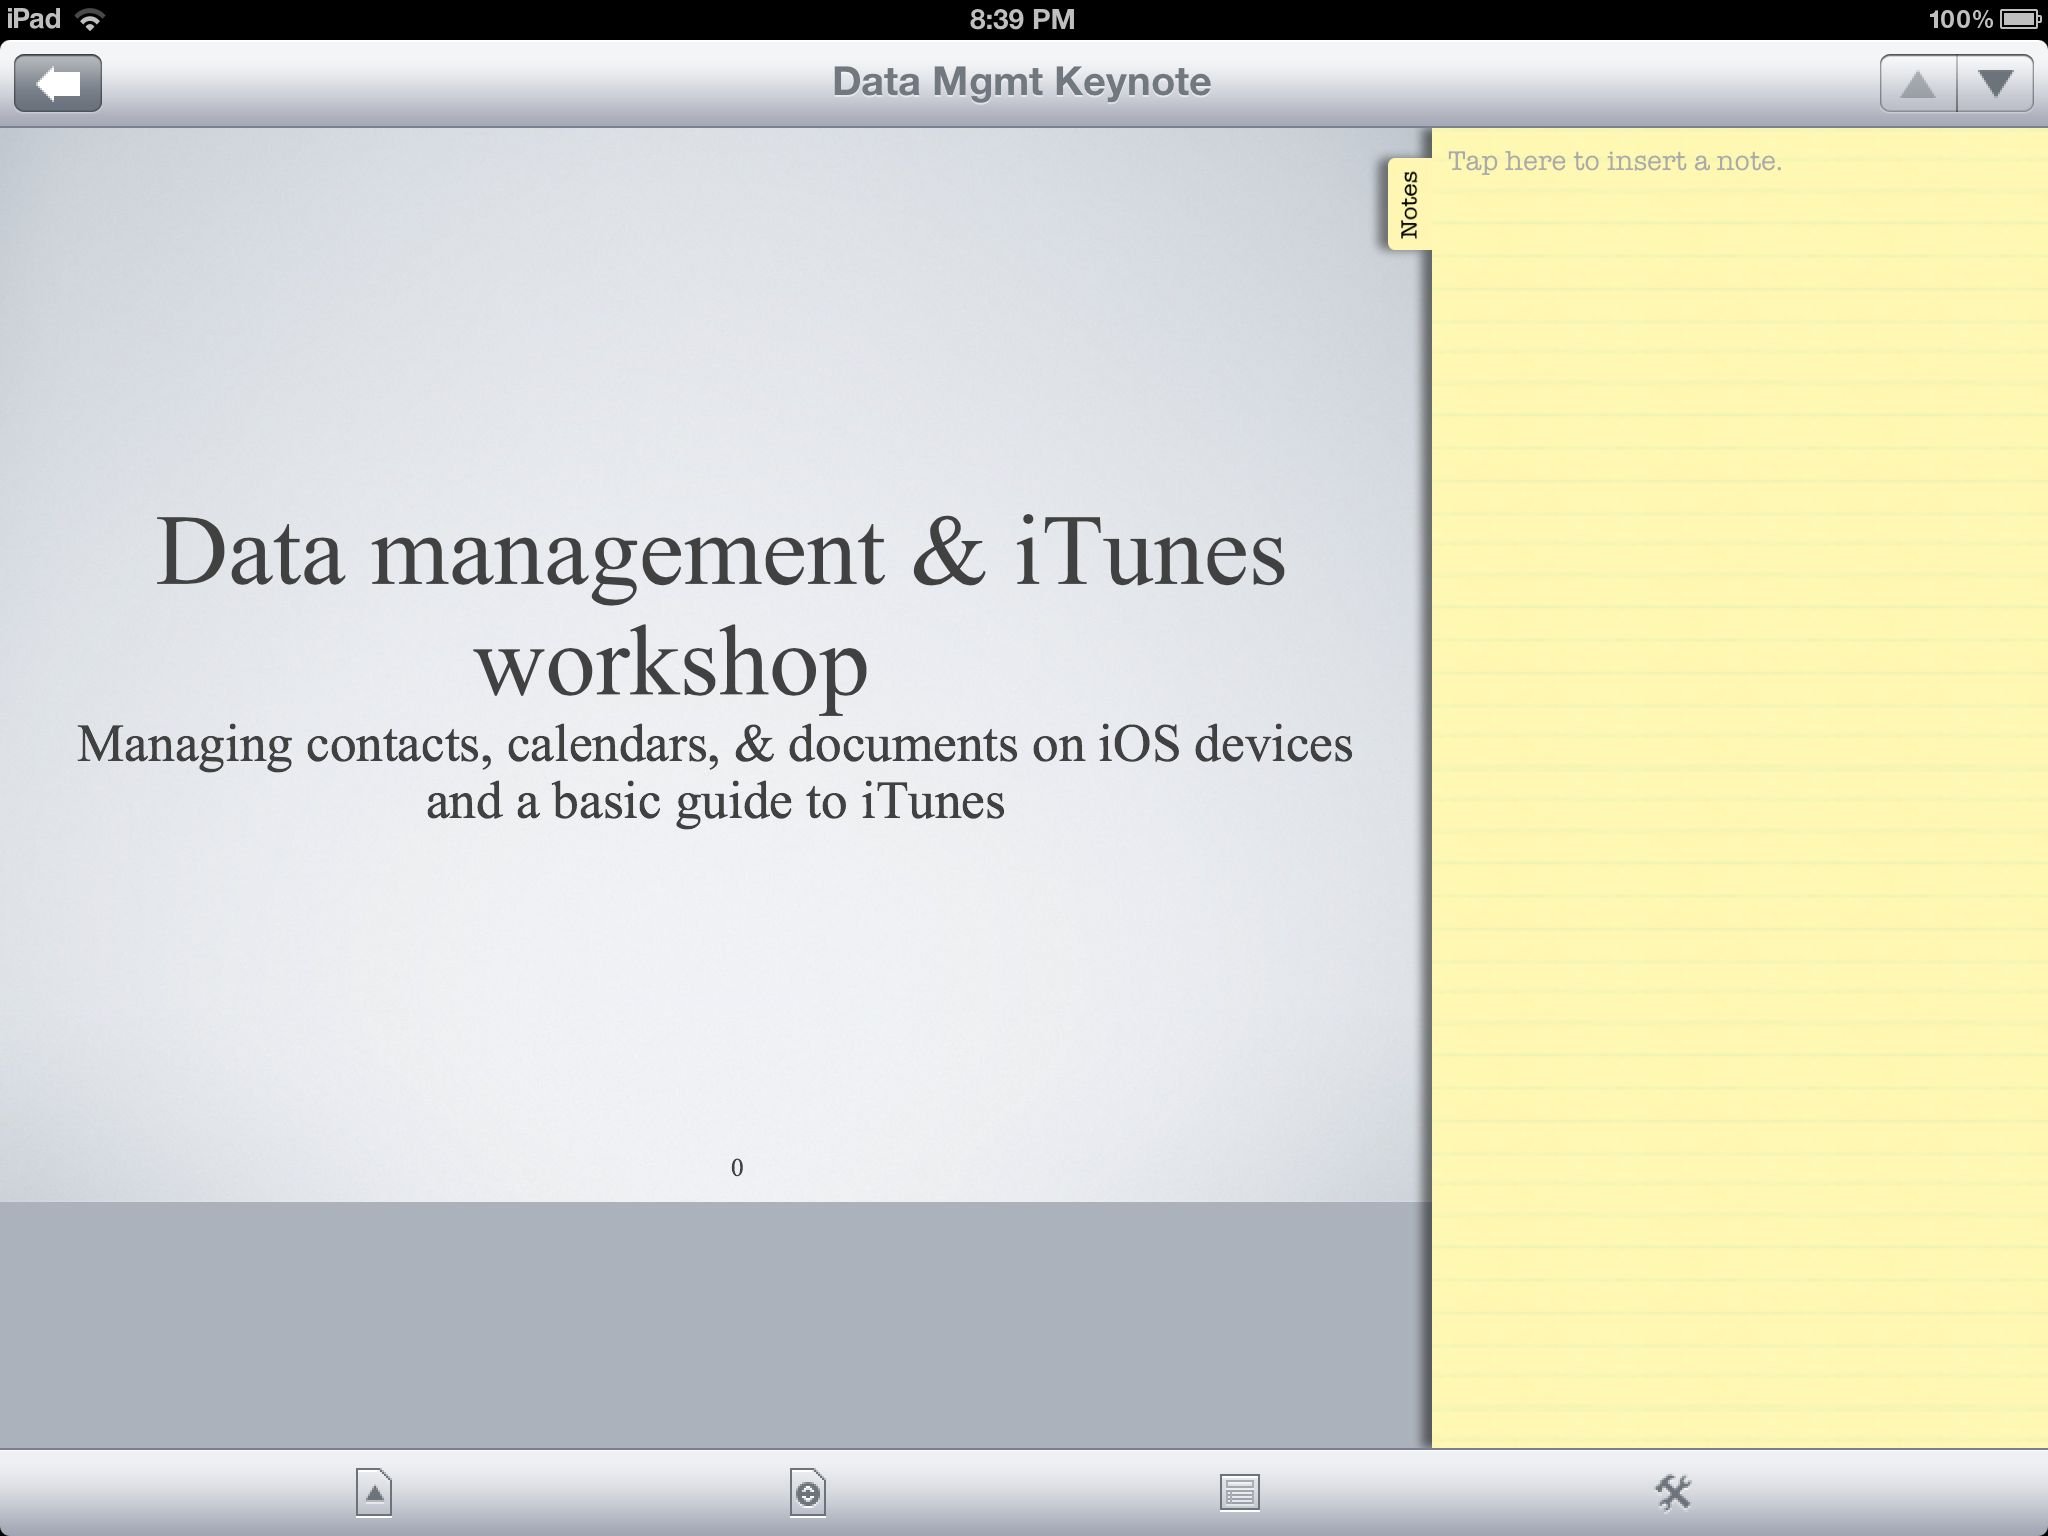 Docs To Go editing presentations on iPad